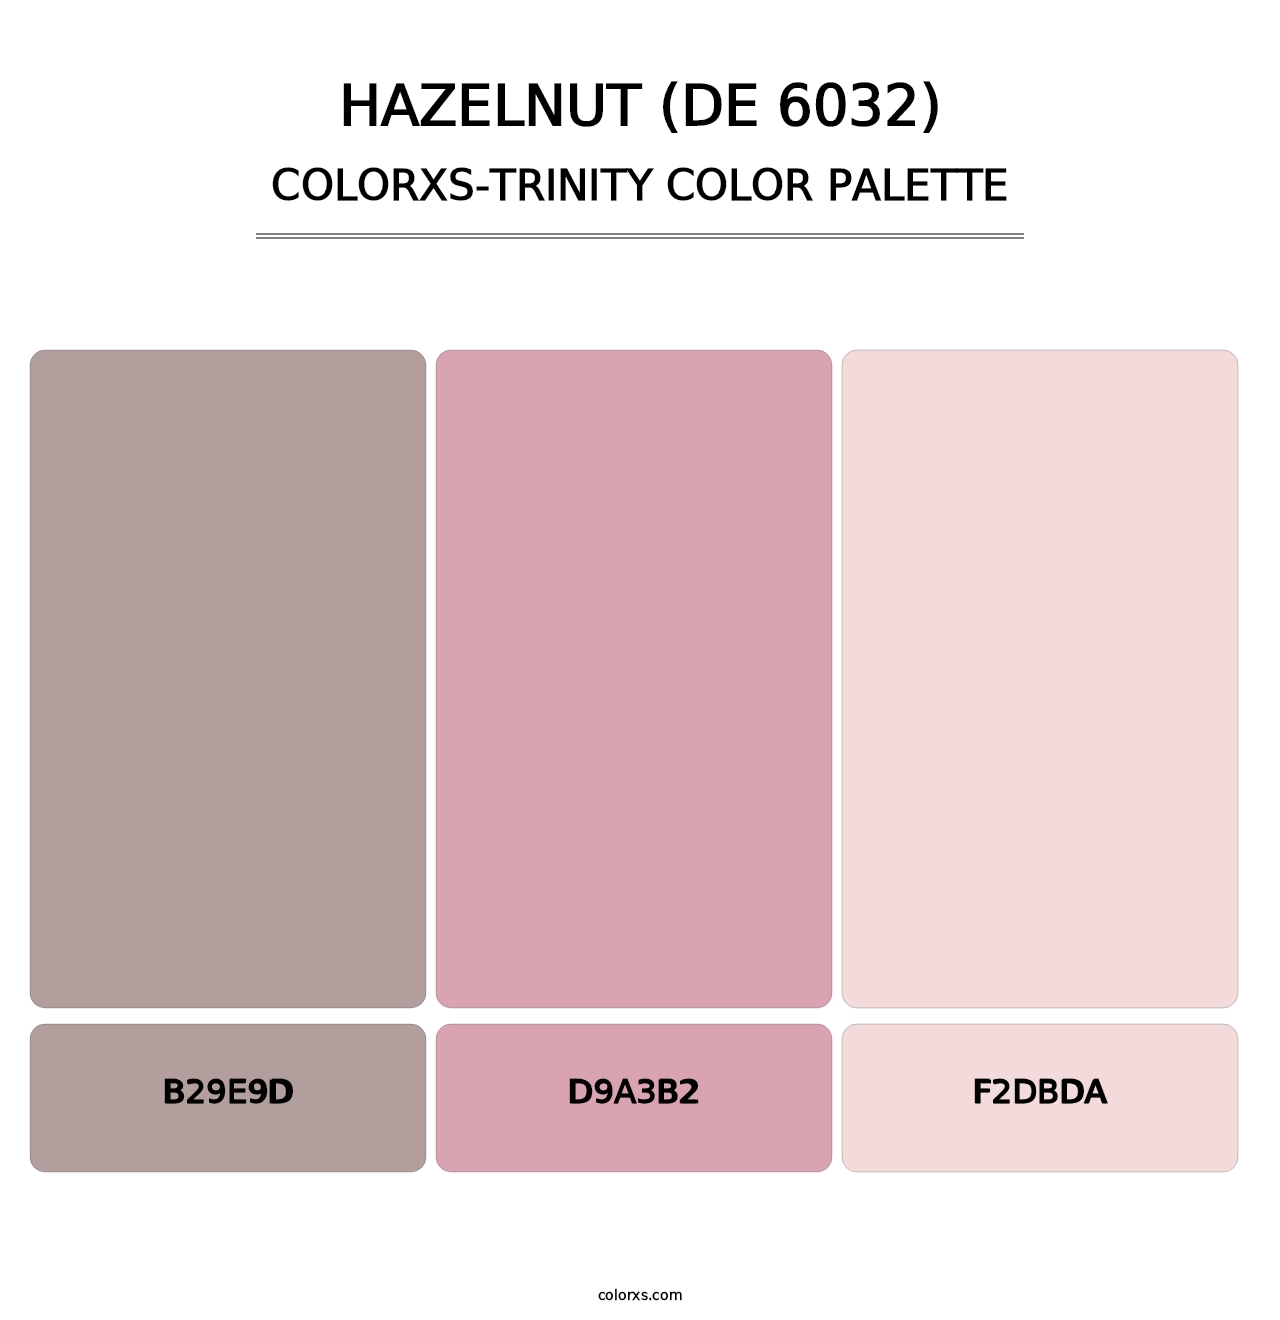 Hazelnut (DE 6032) - Colorxs Trinity Palette